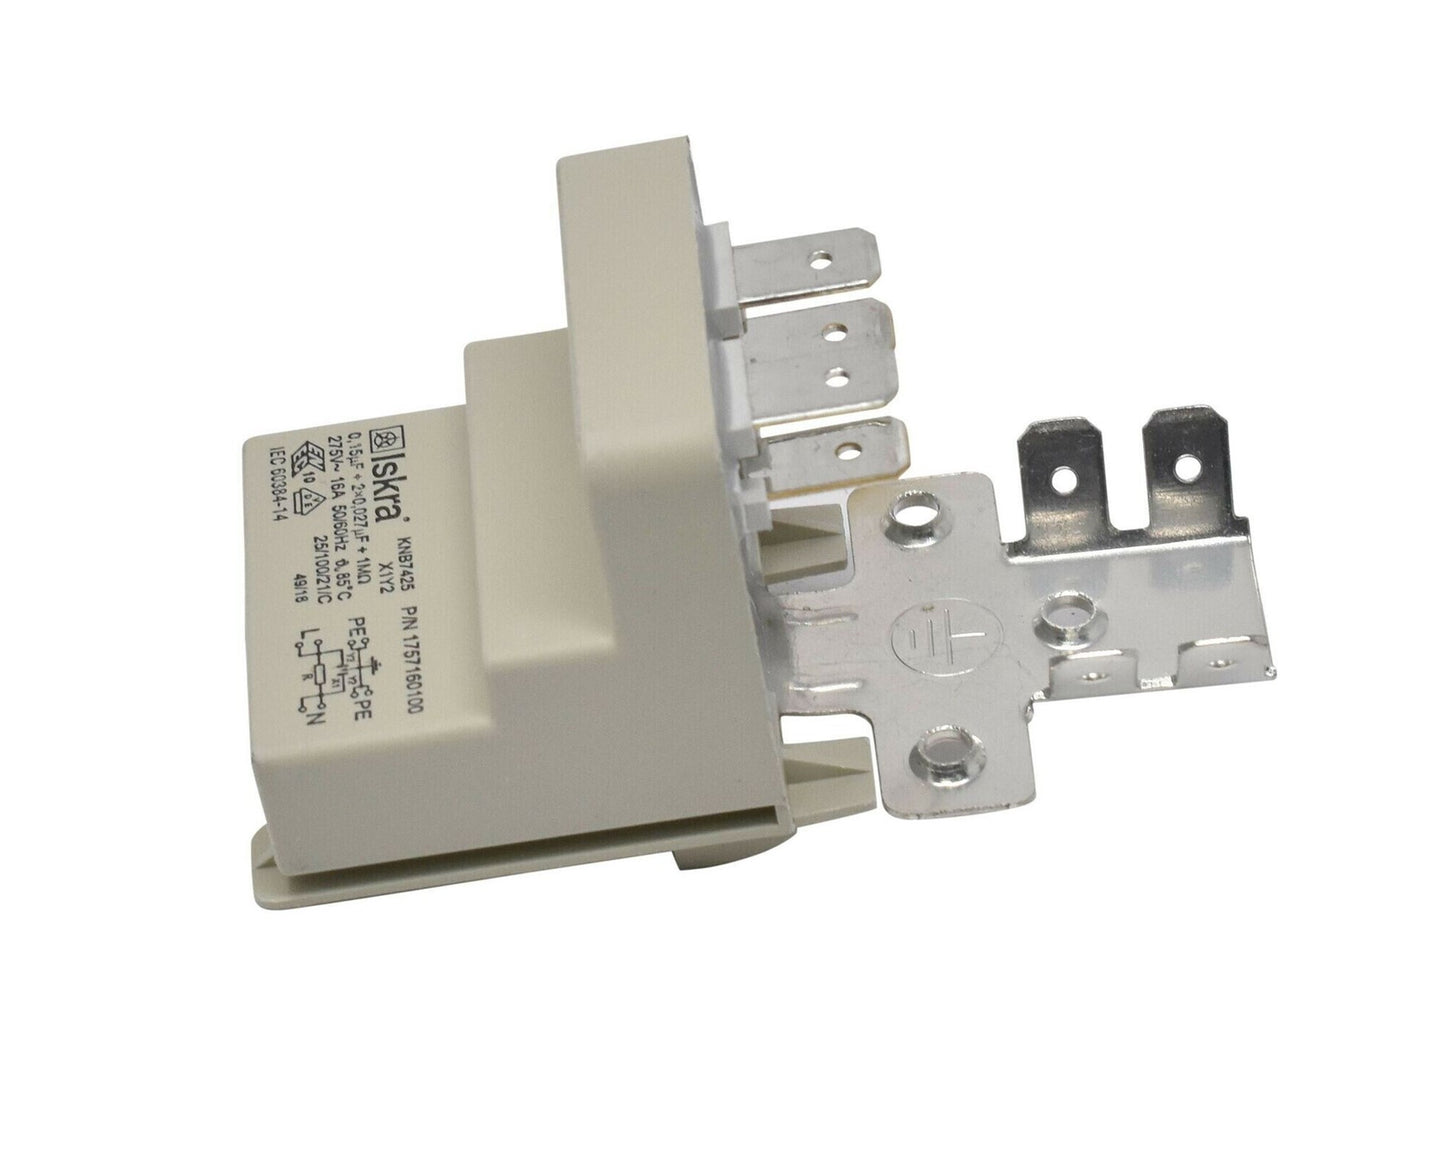 0,15UF Noise Interference Filter Mains Suppressor for Beko Dishwasher, Tumble Dryer - 1746530100, 1757160100, 1883880400, 1886870100, 2974870100